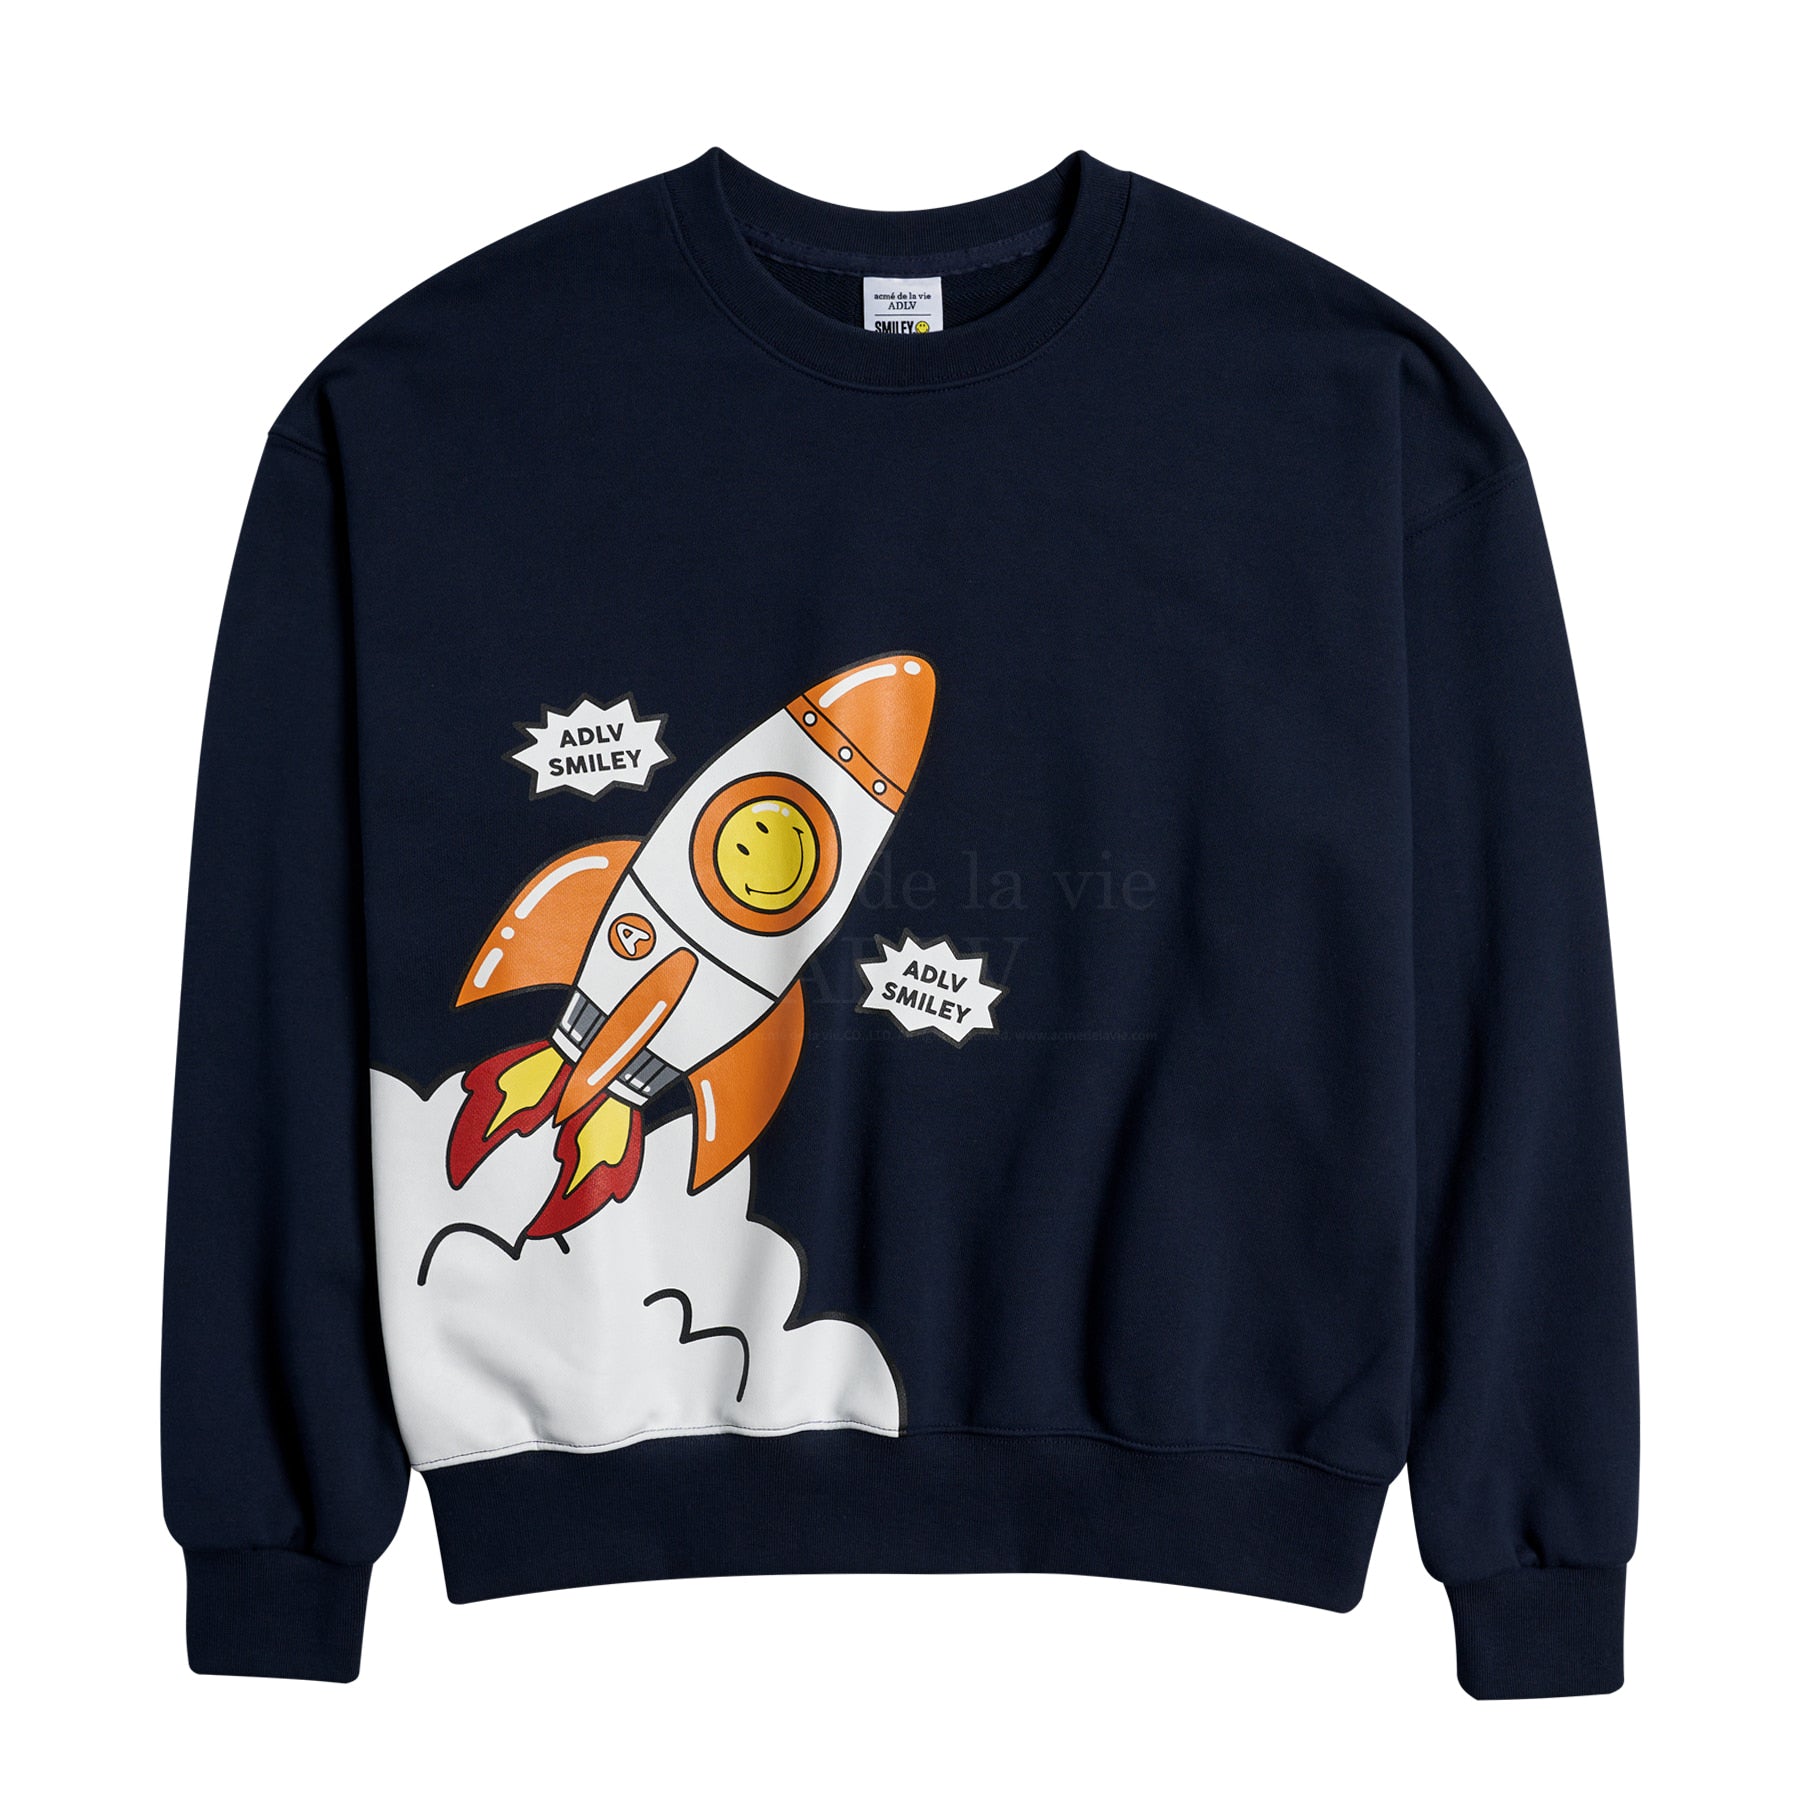 ADLV x Smiley - Rocket Artwork Printing Sweatshirt